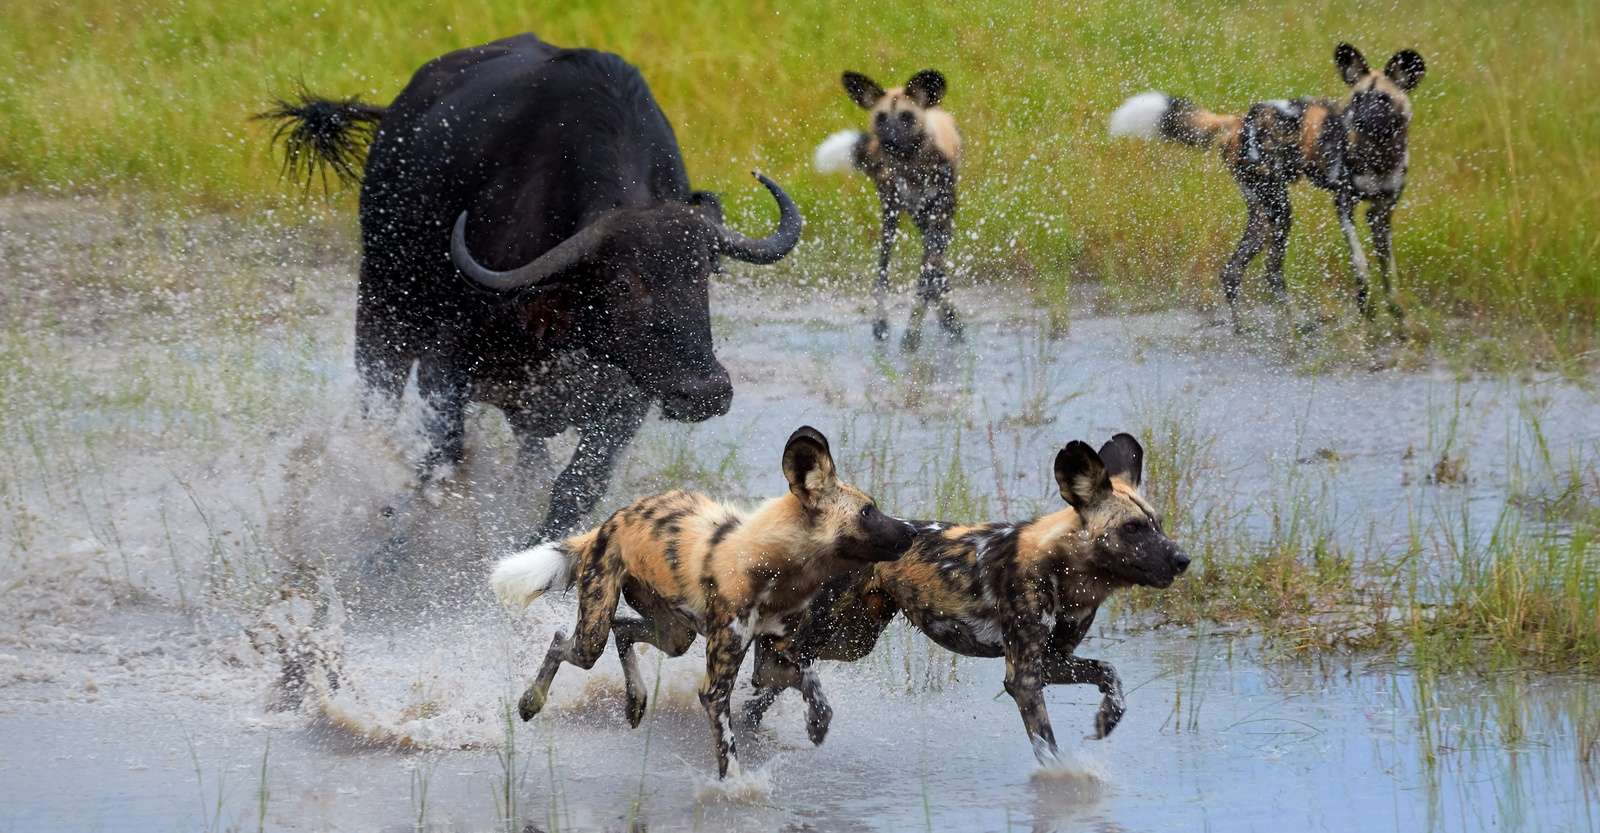 African water buffalo and African wild dogs, Okavango Delta, Botswana.